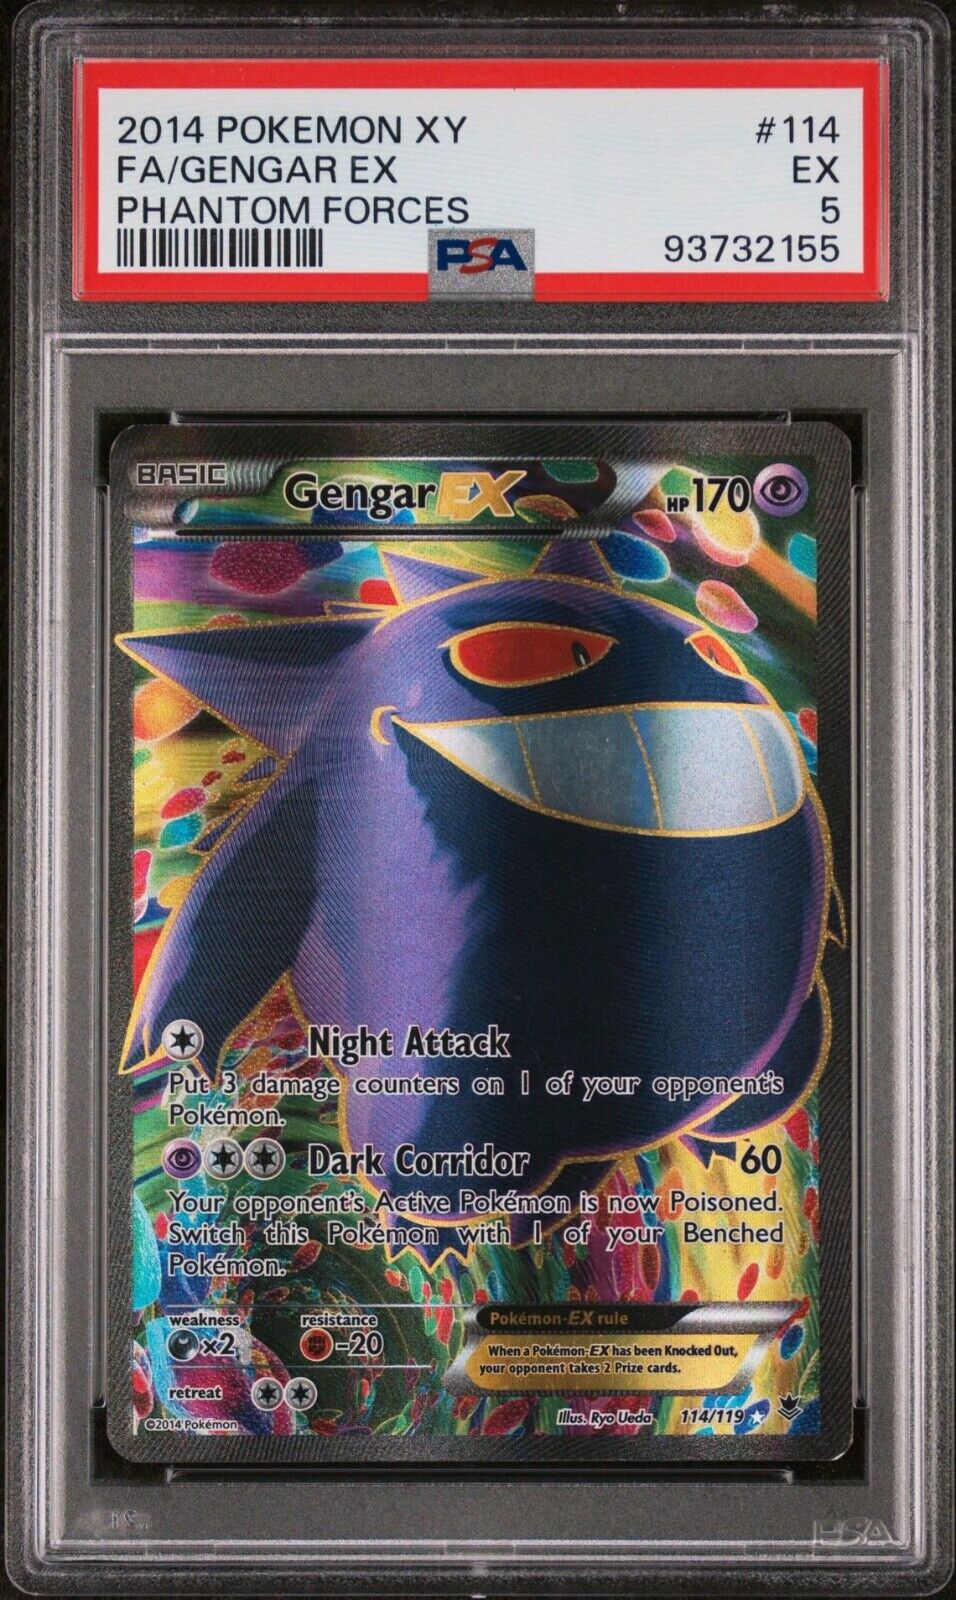 PSA 5 Gengar EX 114 2014 Pokemon Card XY Phantom Forces